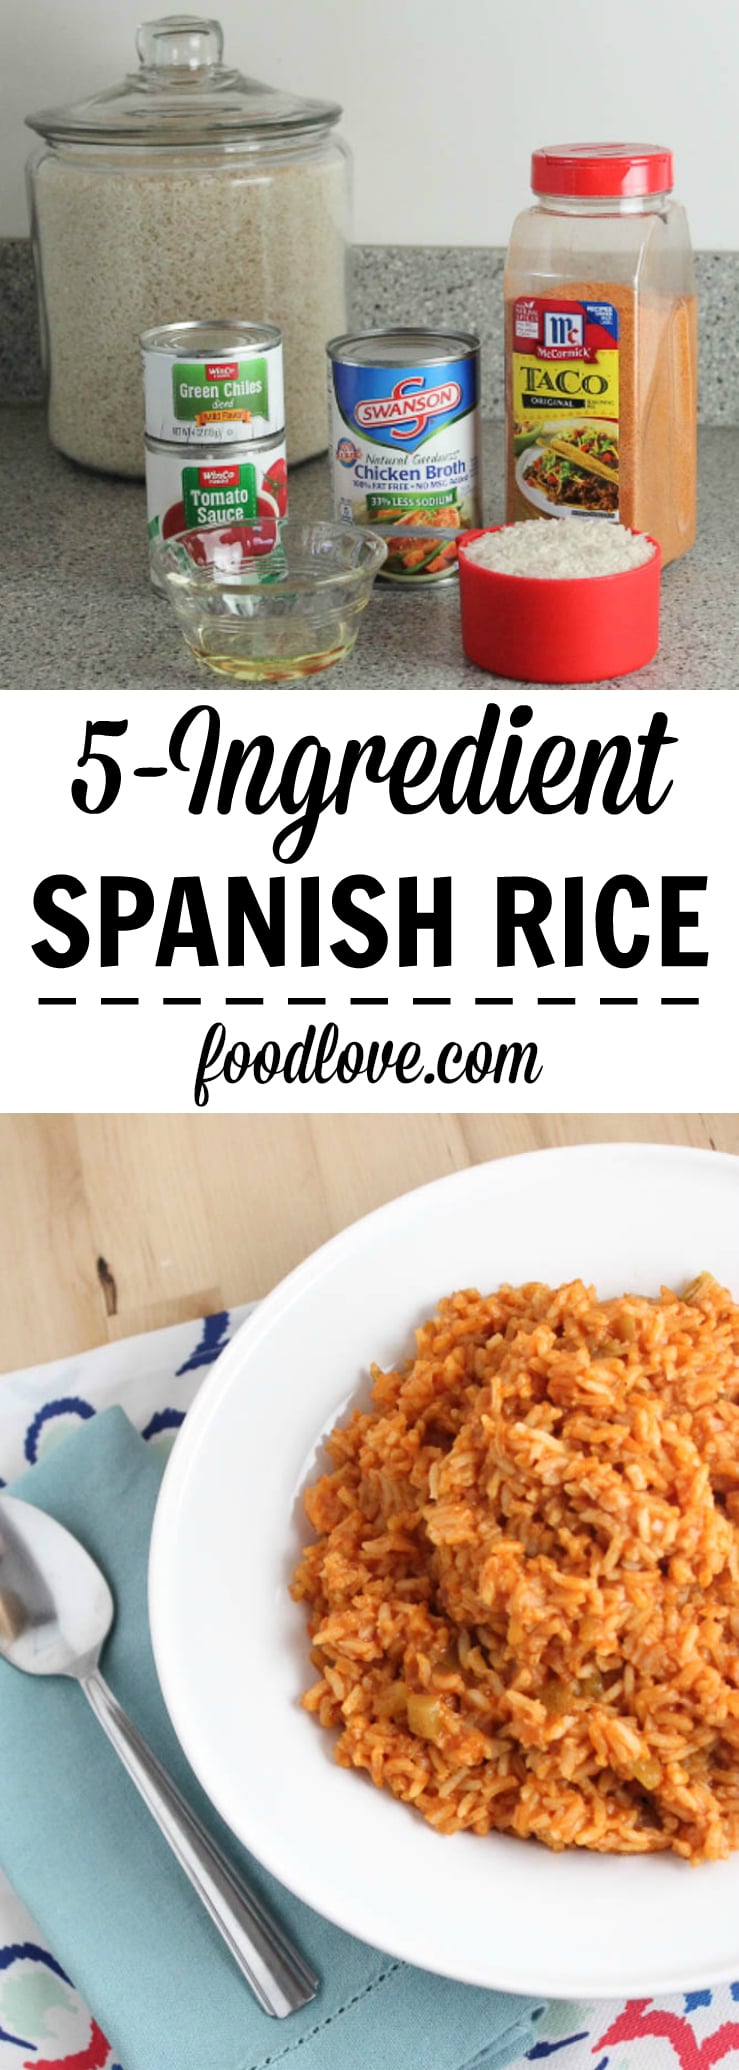 https://foodlove.com/wp-content/uploads/2016/02/easy-spanish-rice.jpg